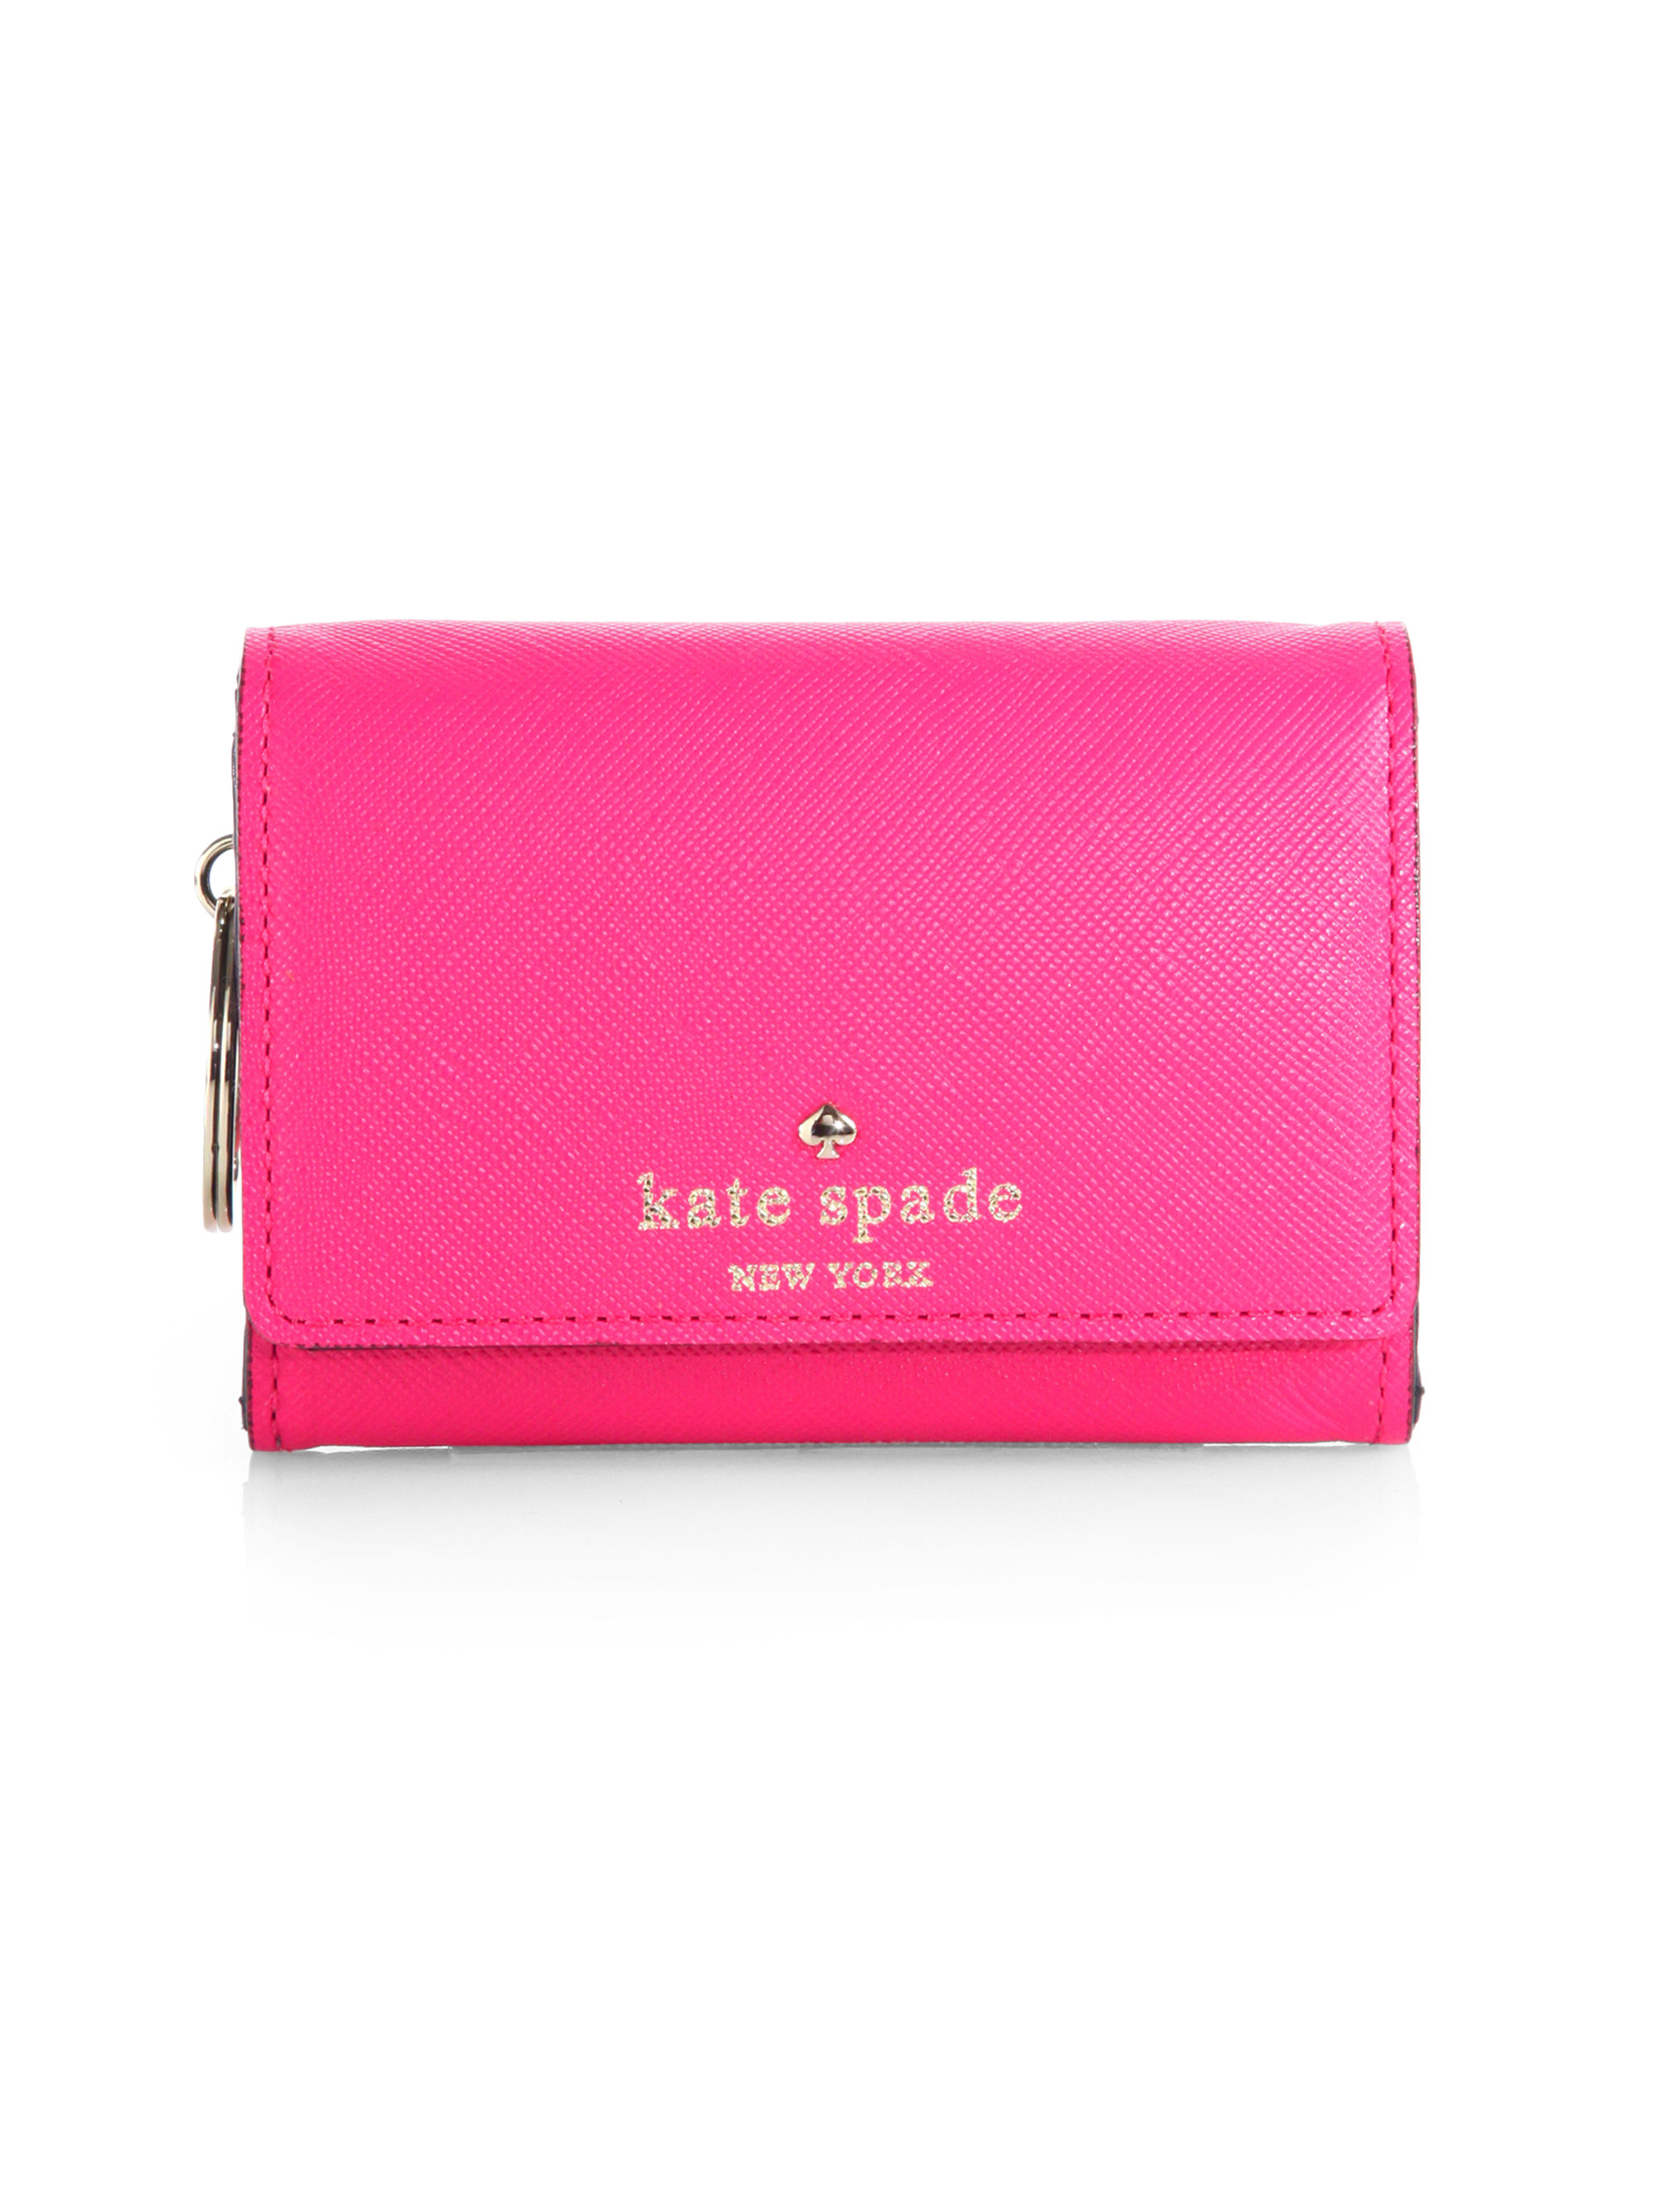 Kate Spade Cherry Lane Small Darla Wallet in Pink (VIVID SNAPDRAGON) | Lyst